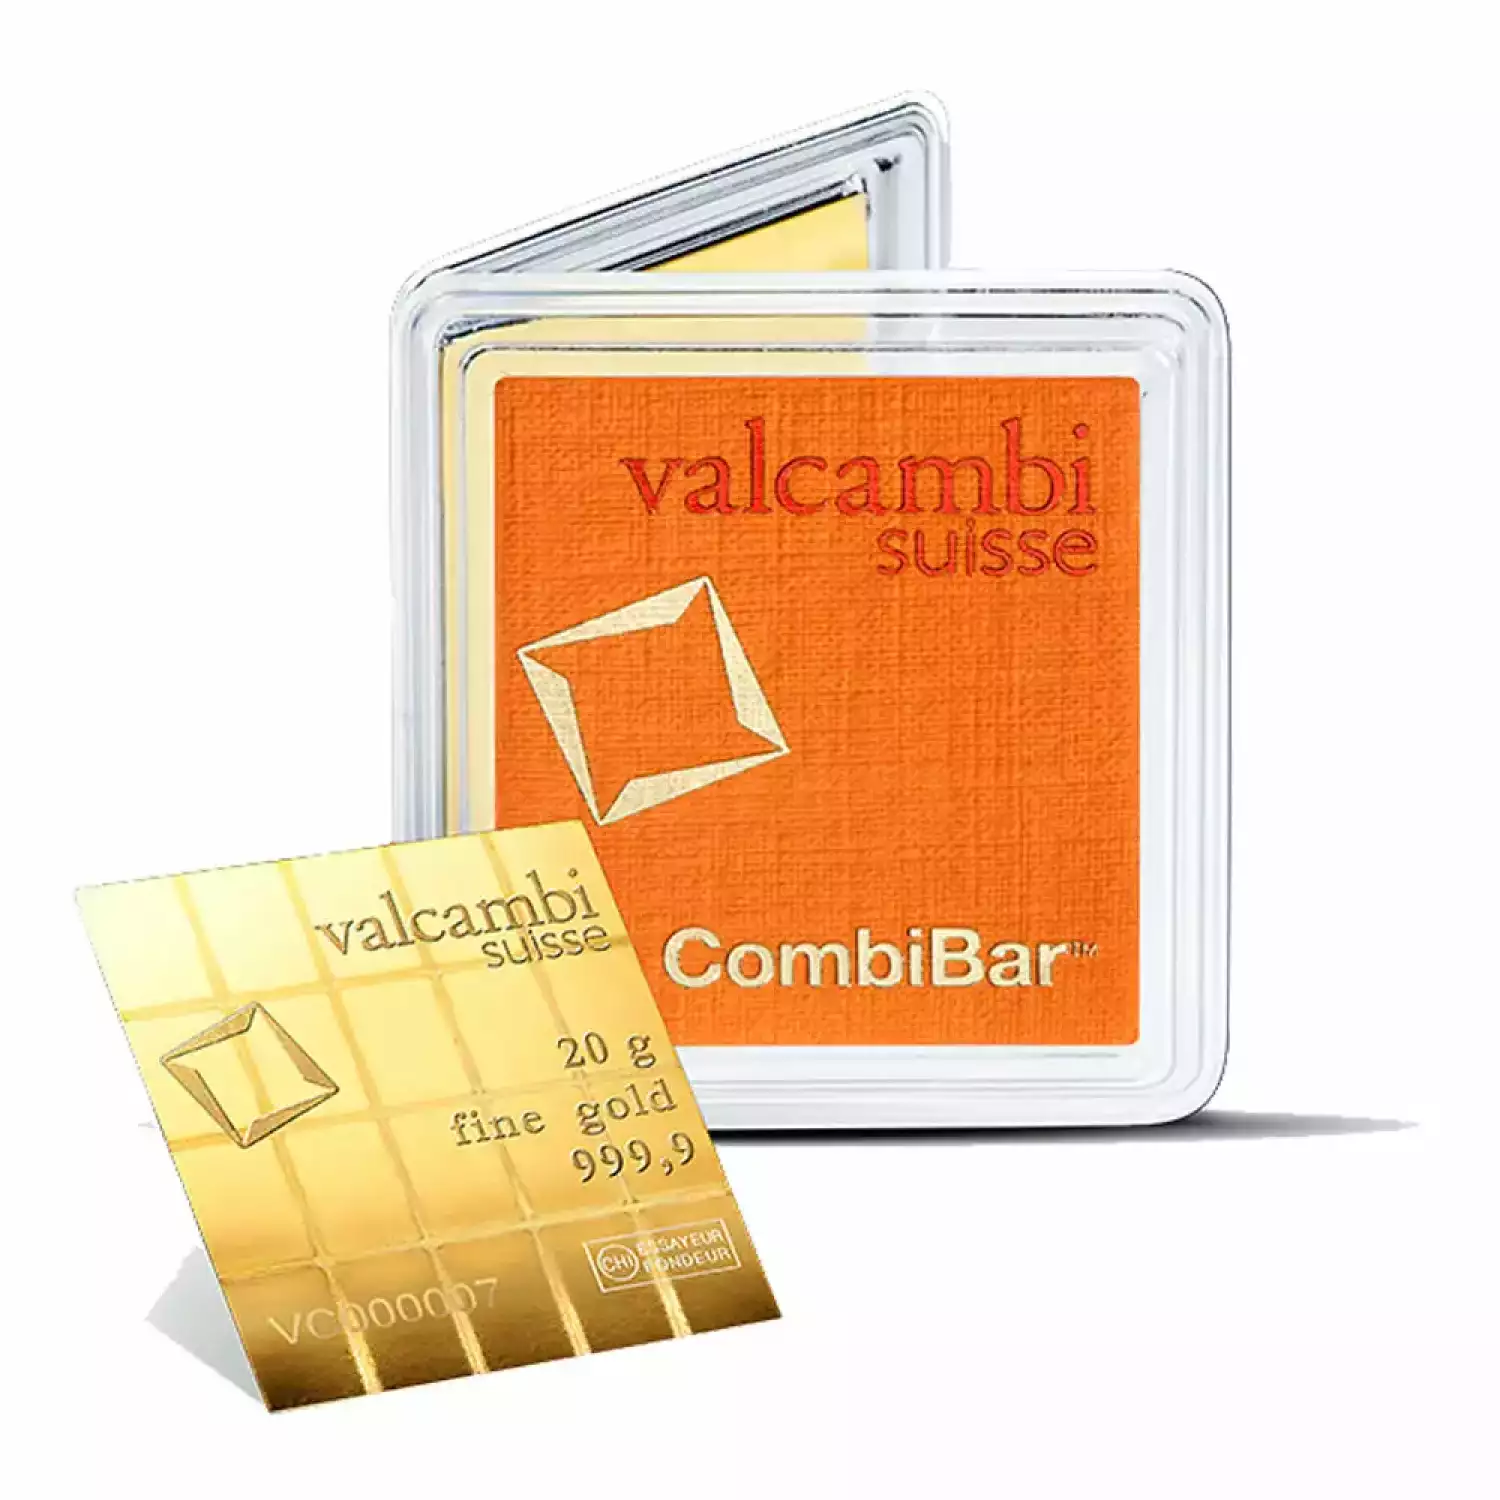 1g x 20 Valcambi Gold CombiBar (2)